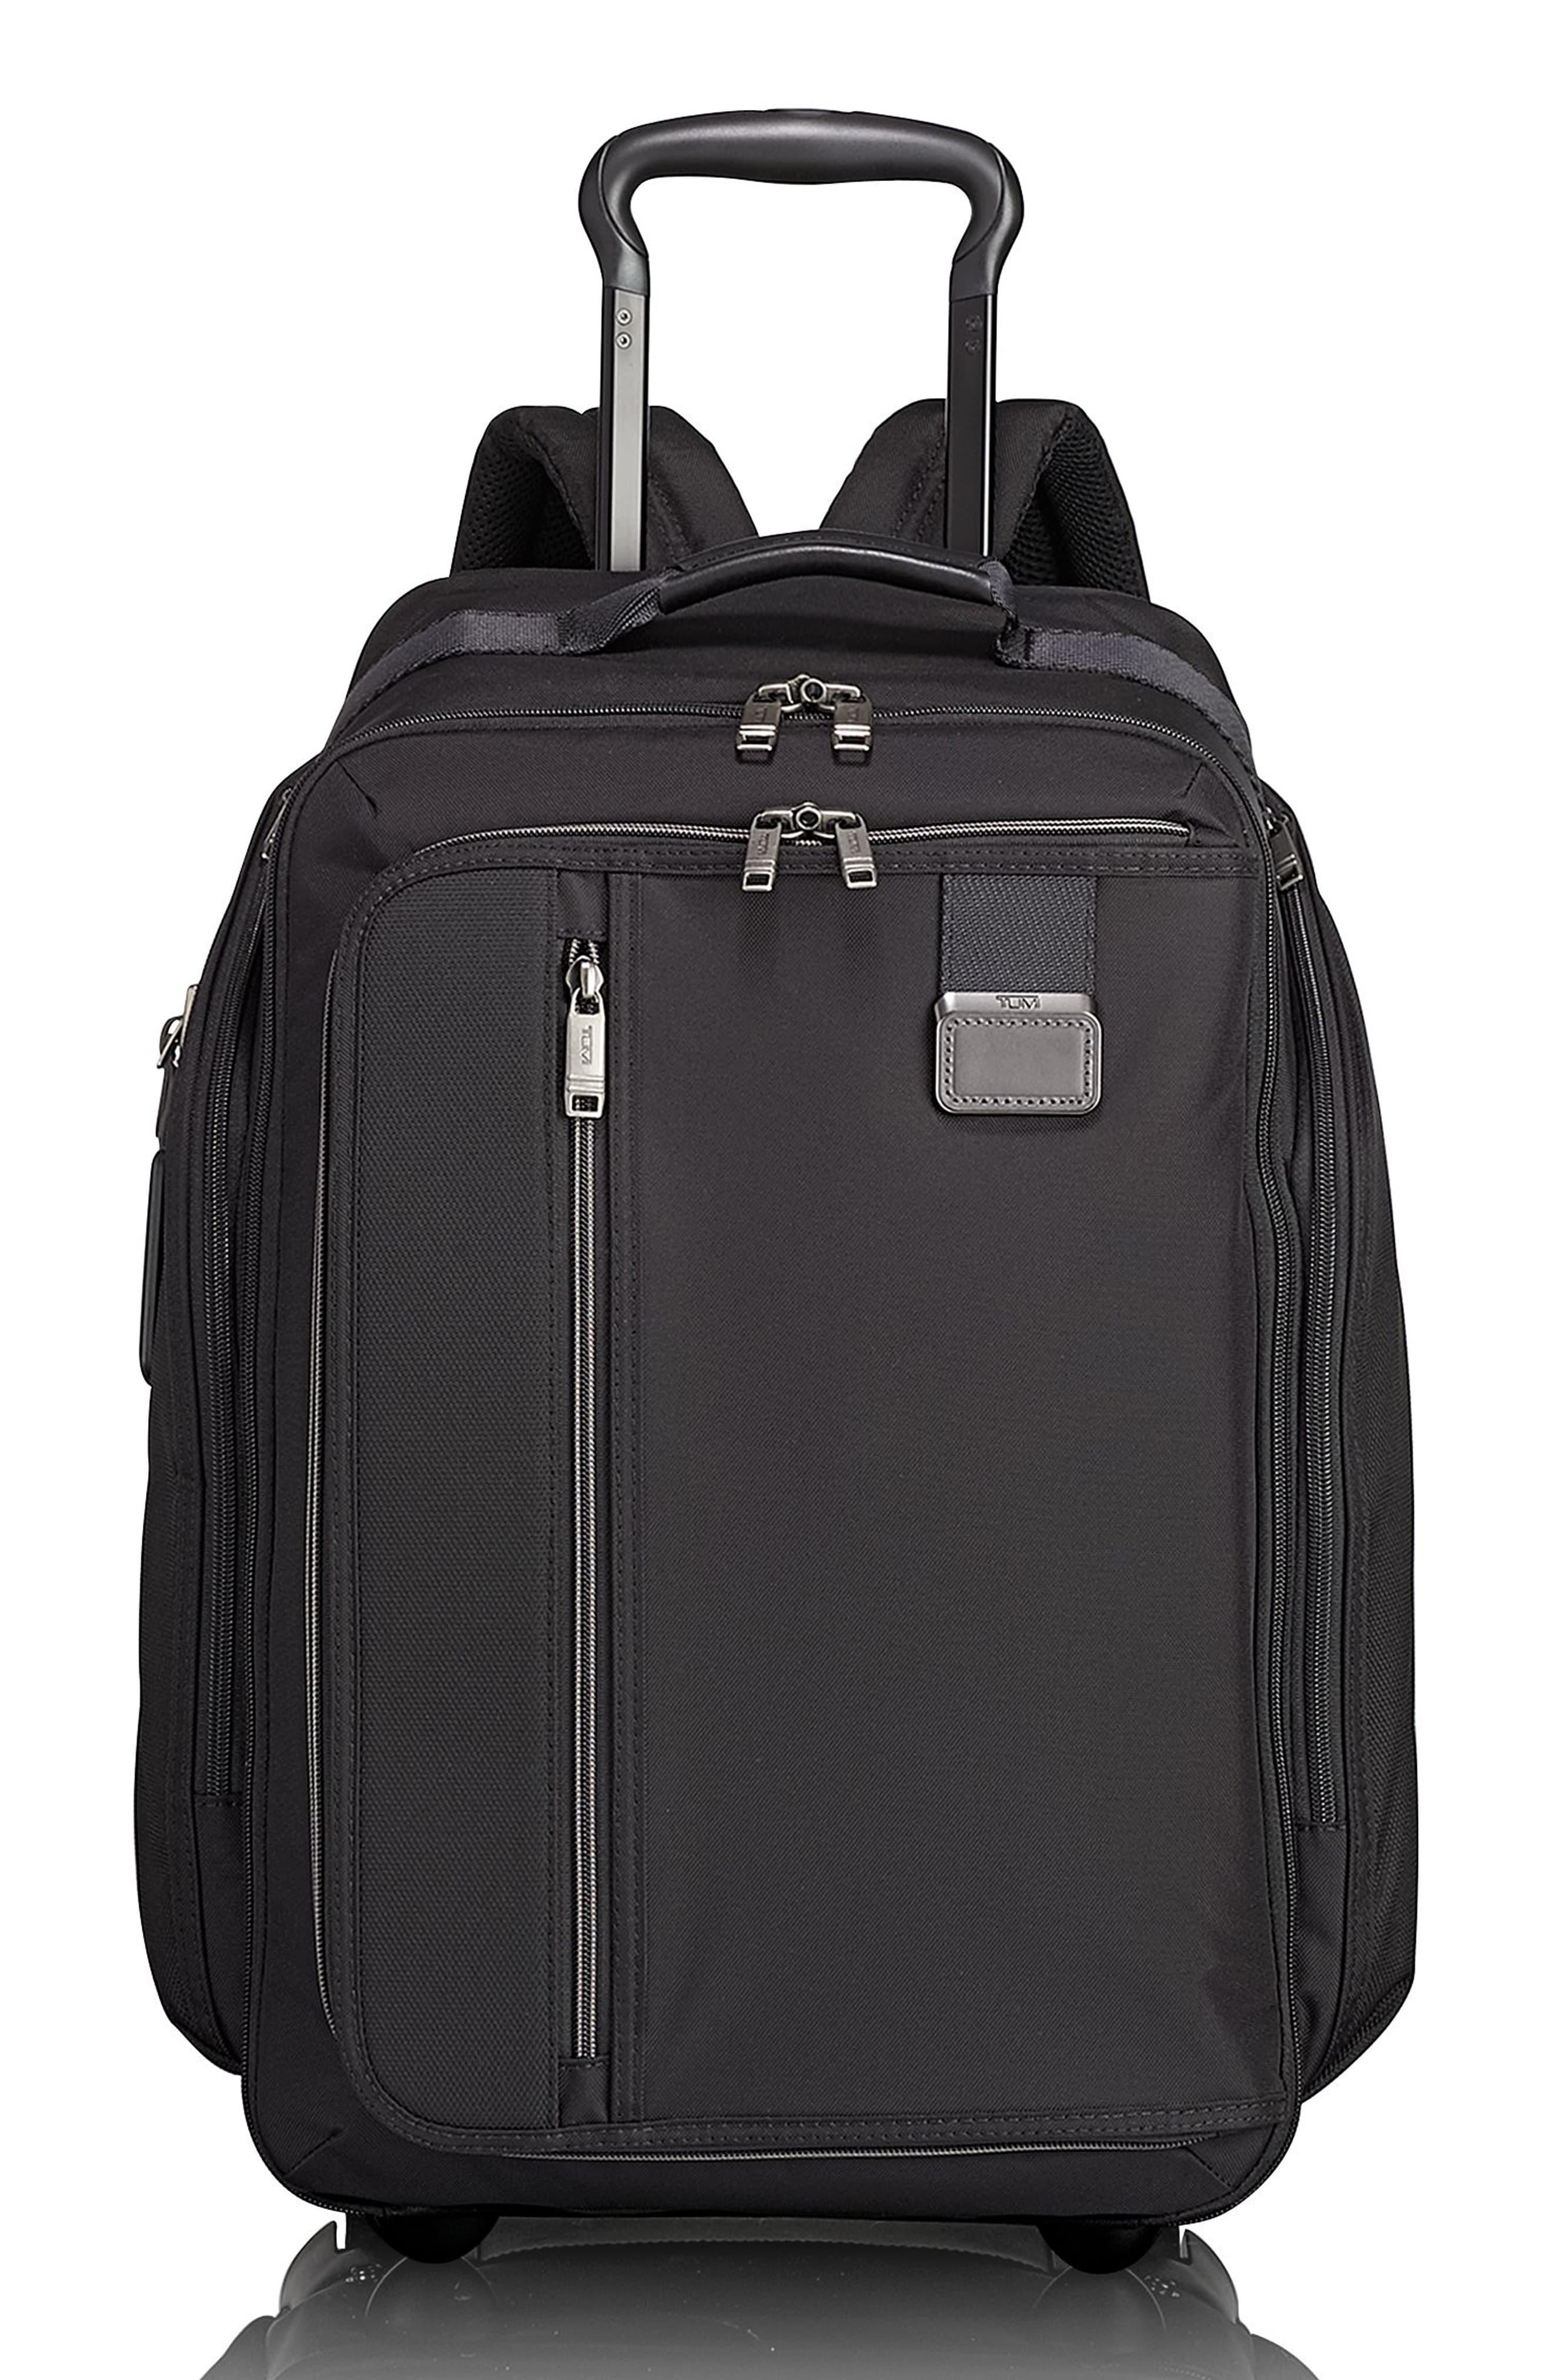 Tumi Merge Wheeled Backpack in Black for Men - Lyst